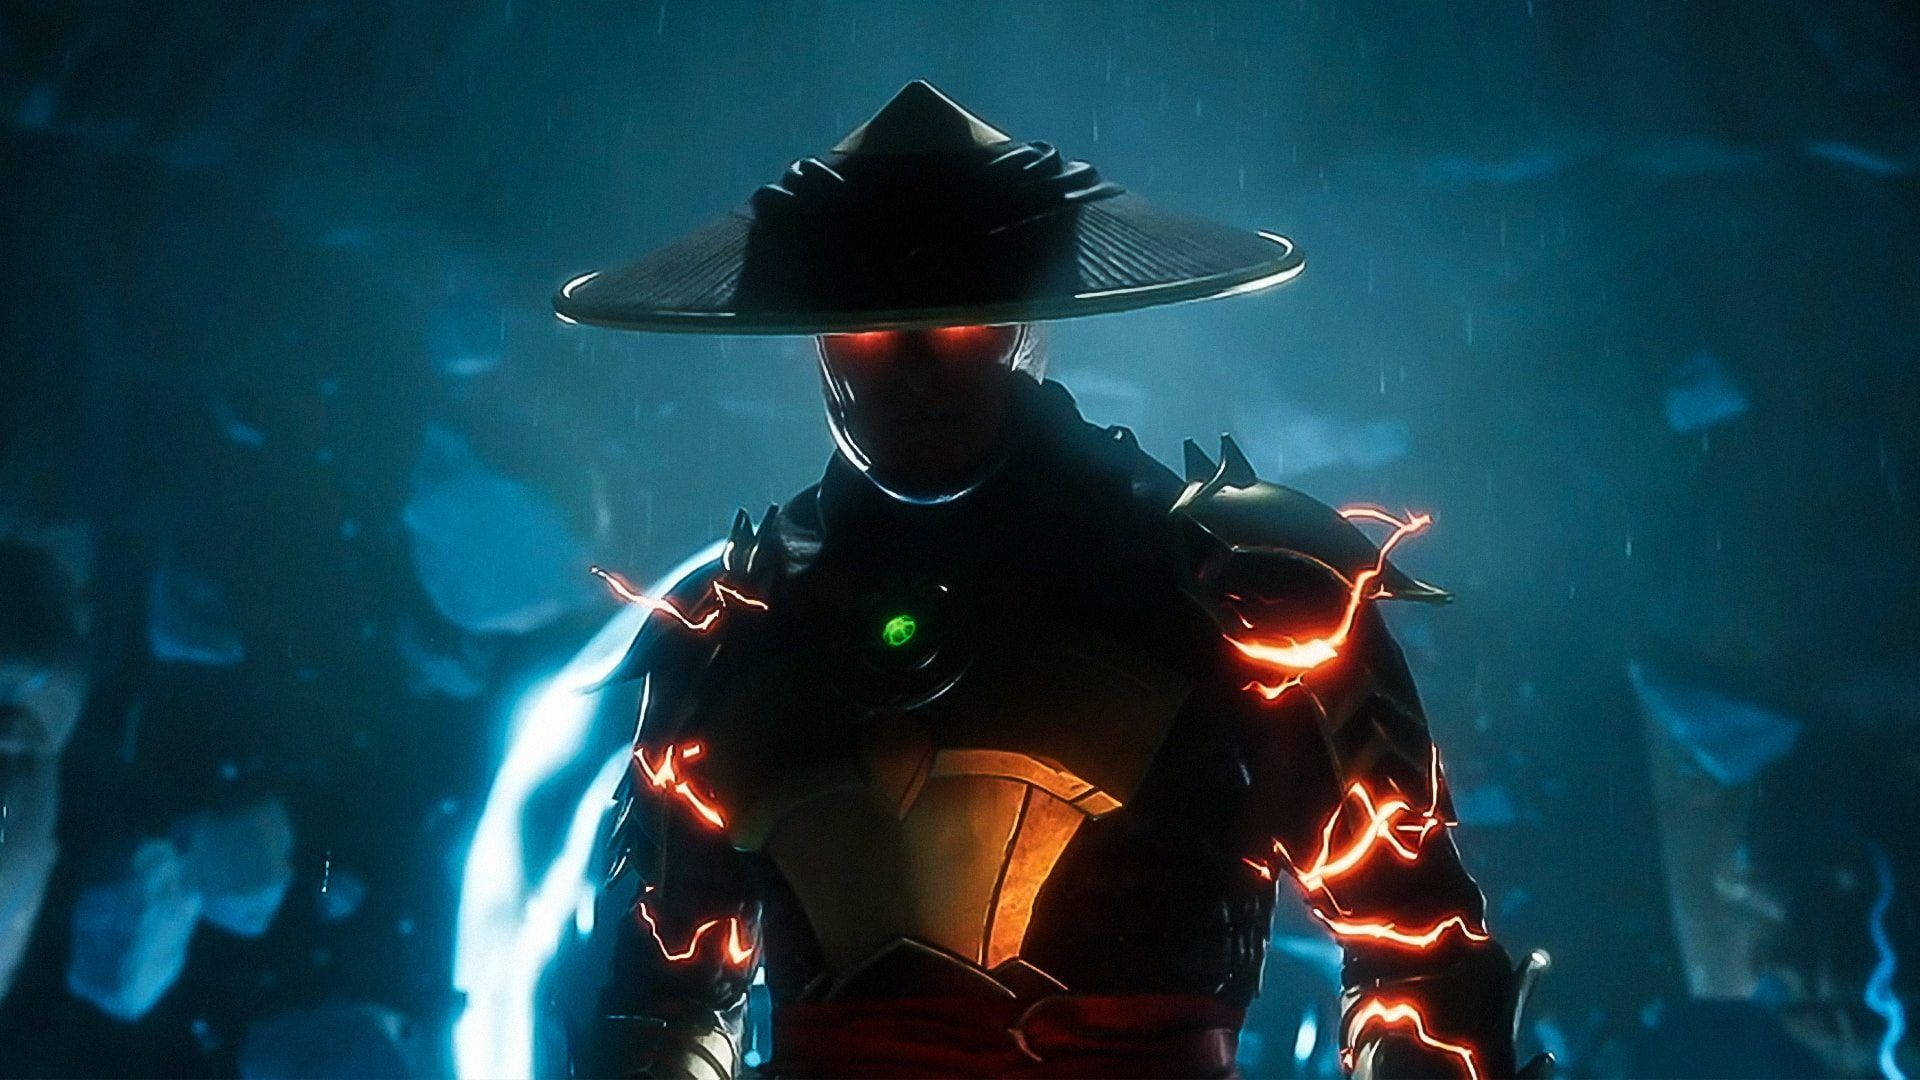 Raiden unleashes powerful lightning in Mortal Kombat 11 Wallpaper